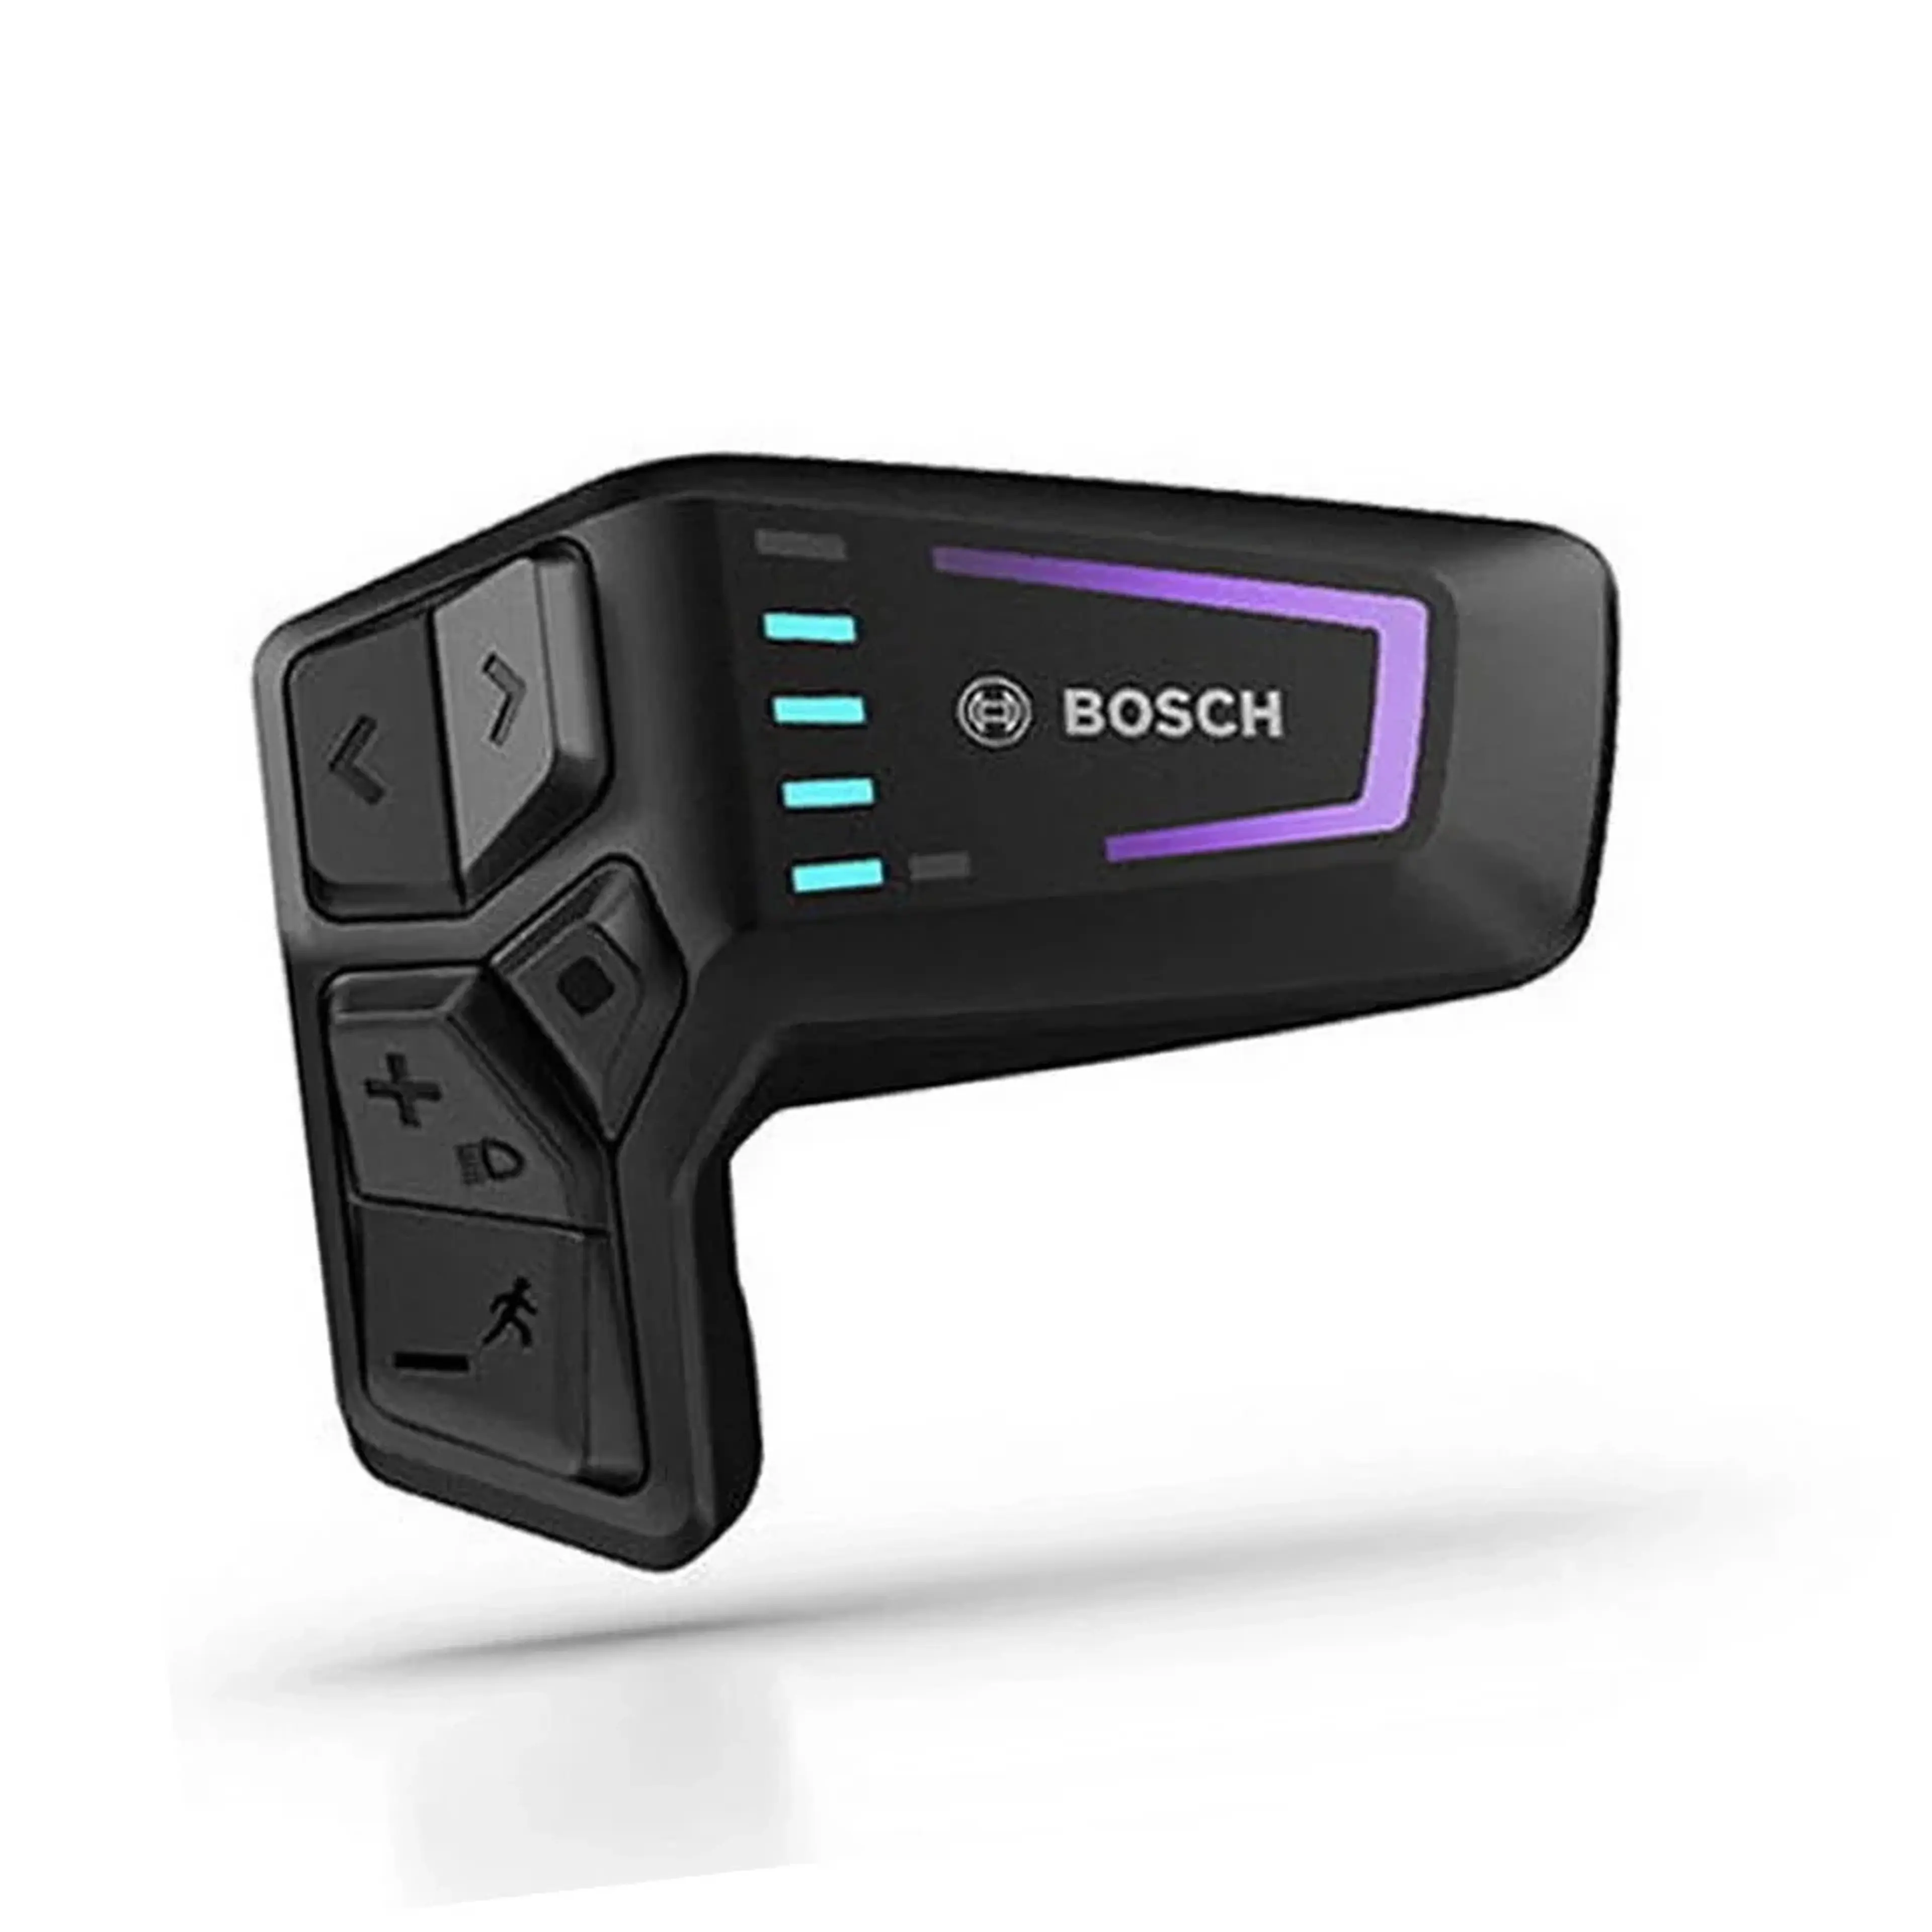 3. Telecomanda Controller Bosch LED Remote pentru Bosch Smart System